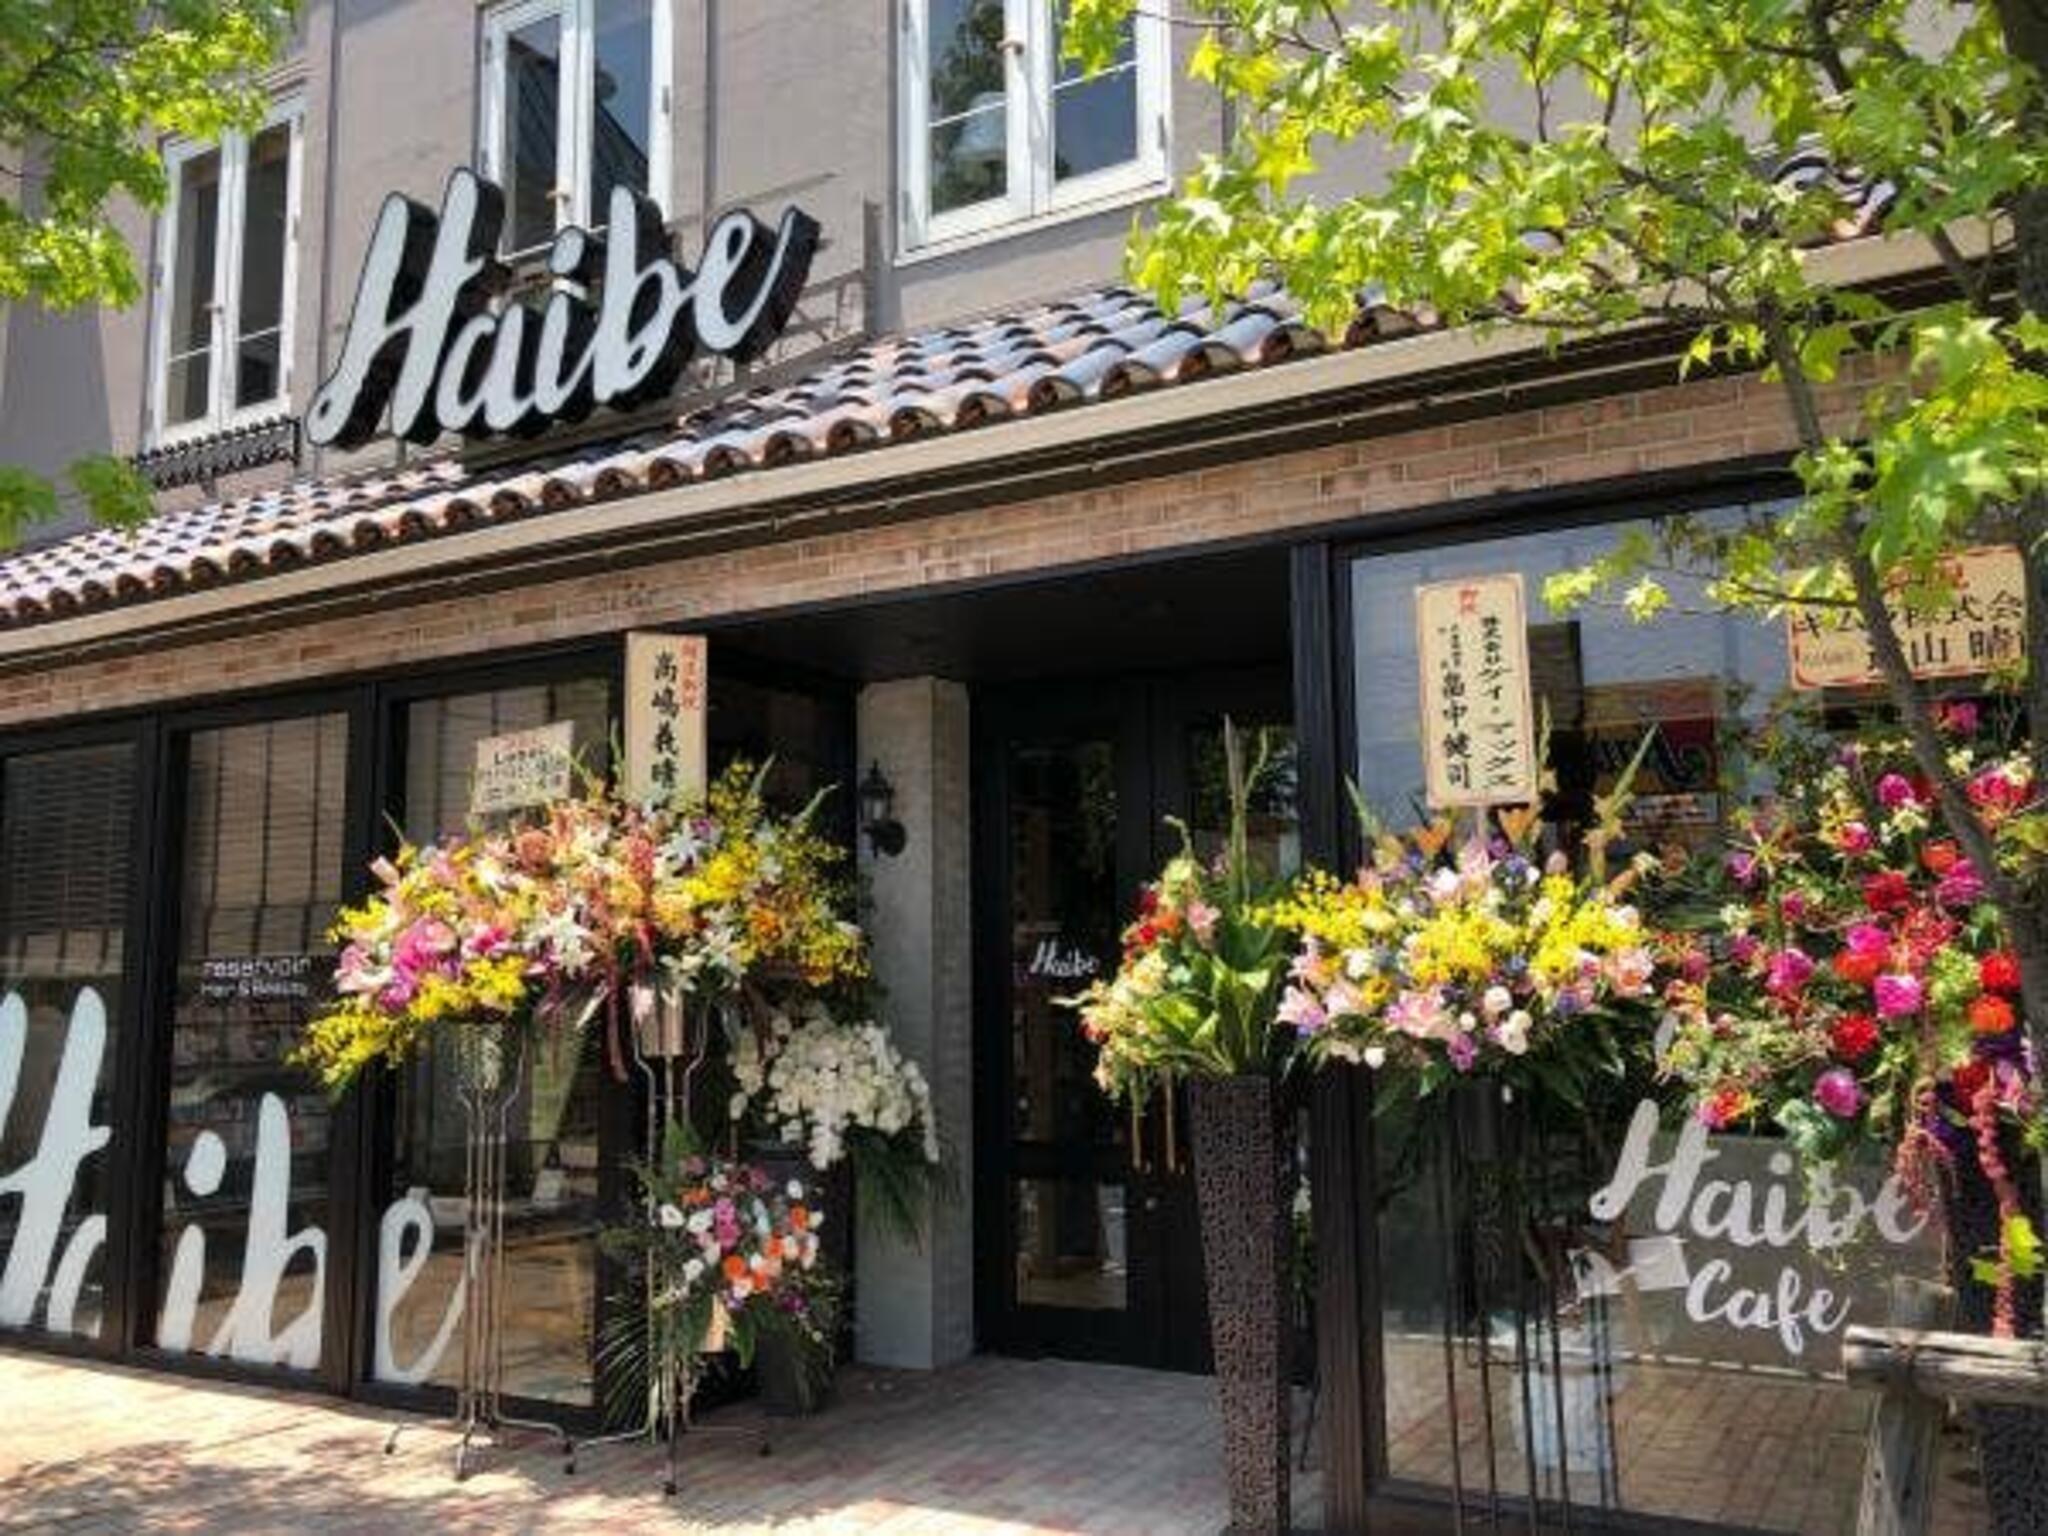 Greenハイブ(Haibe)Cafeの代表写真7